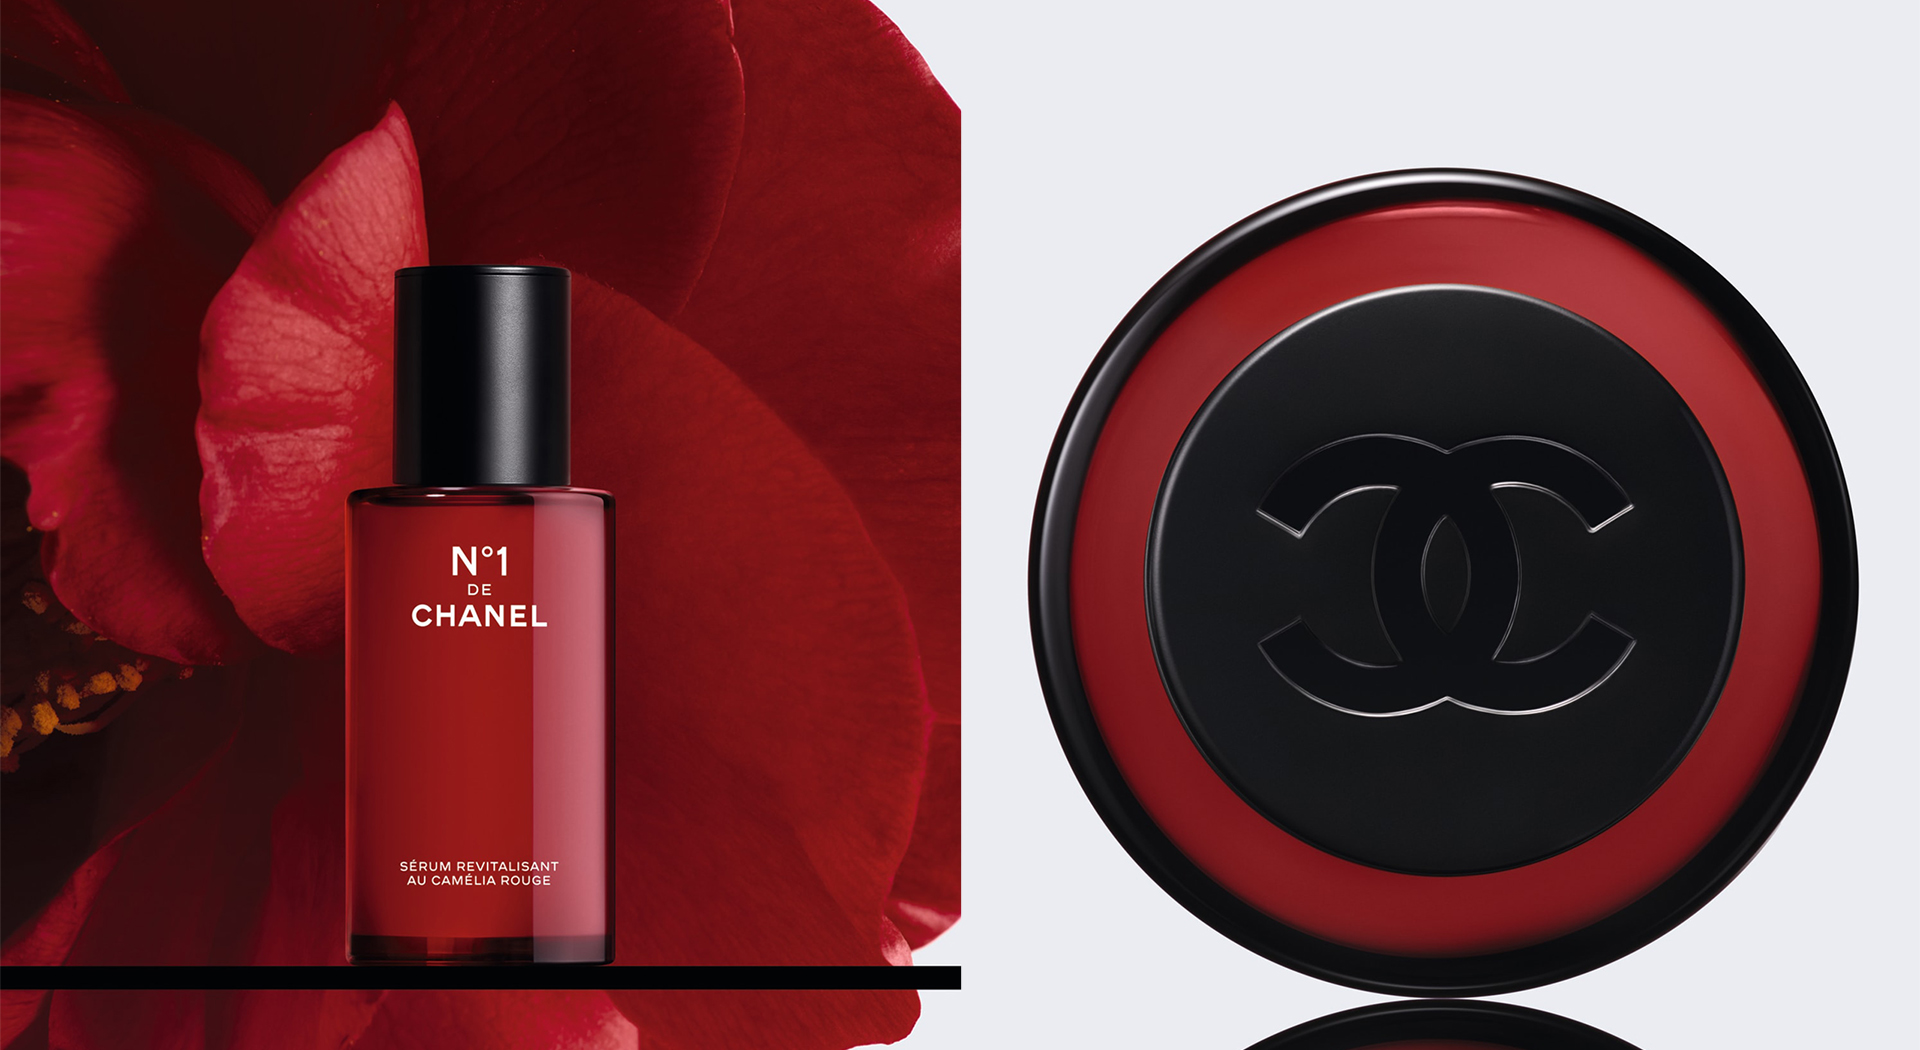 Chanel N1 de Chanel at Ulta Skincare Makeup Fragrance Review